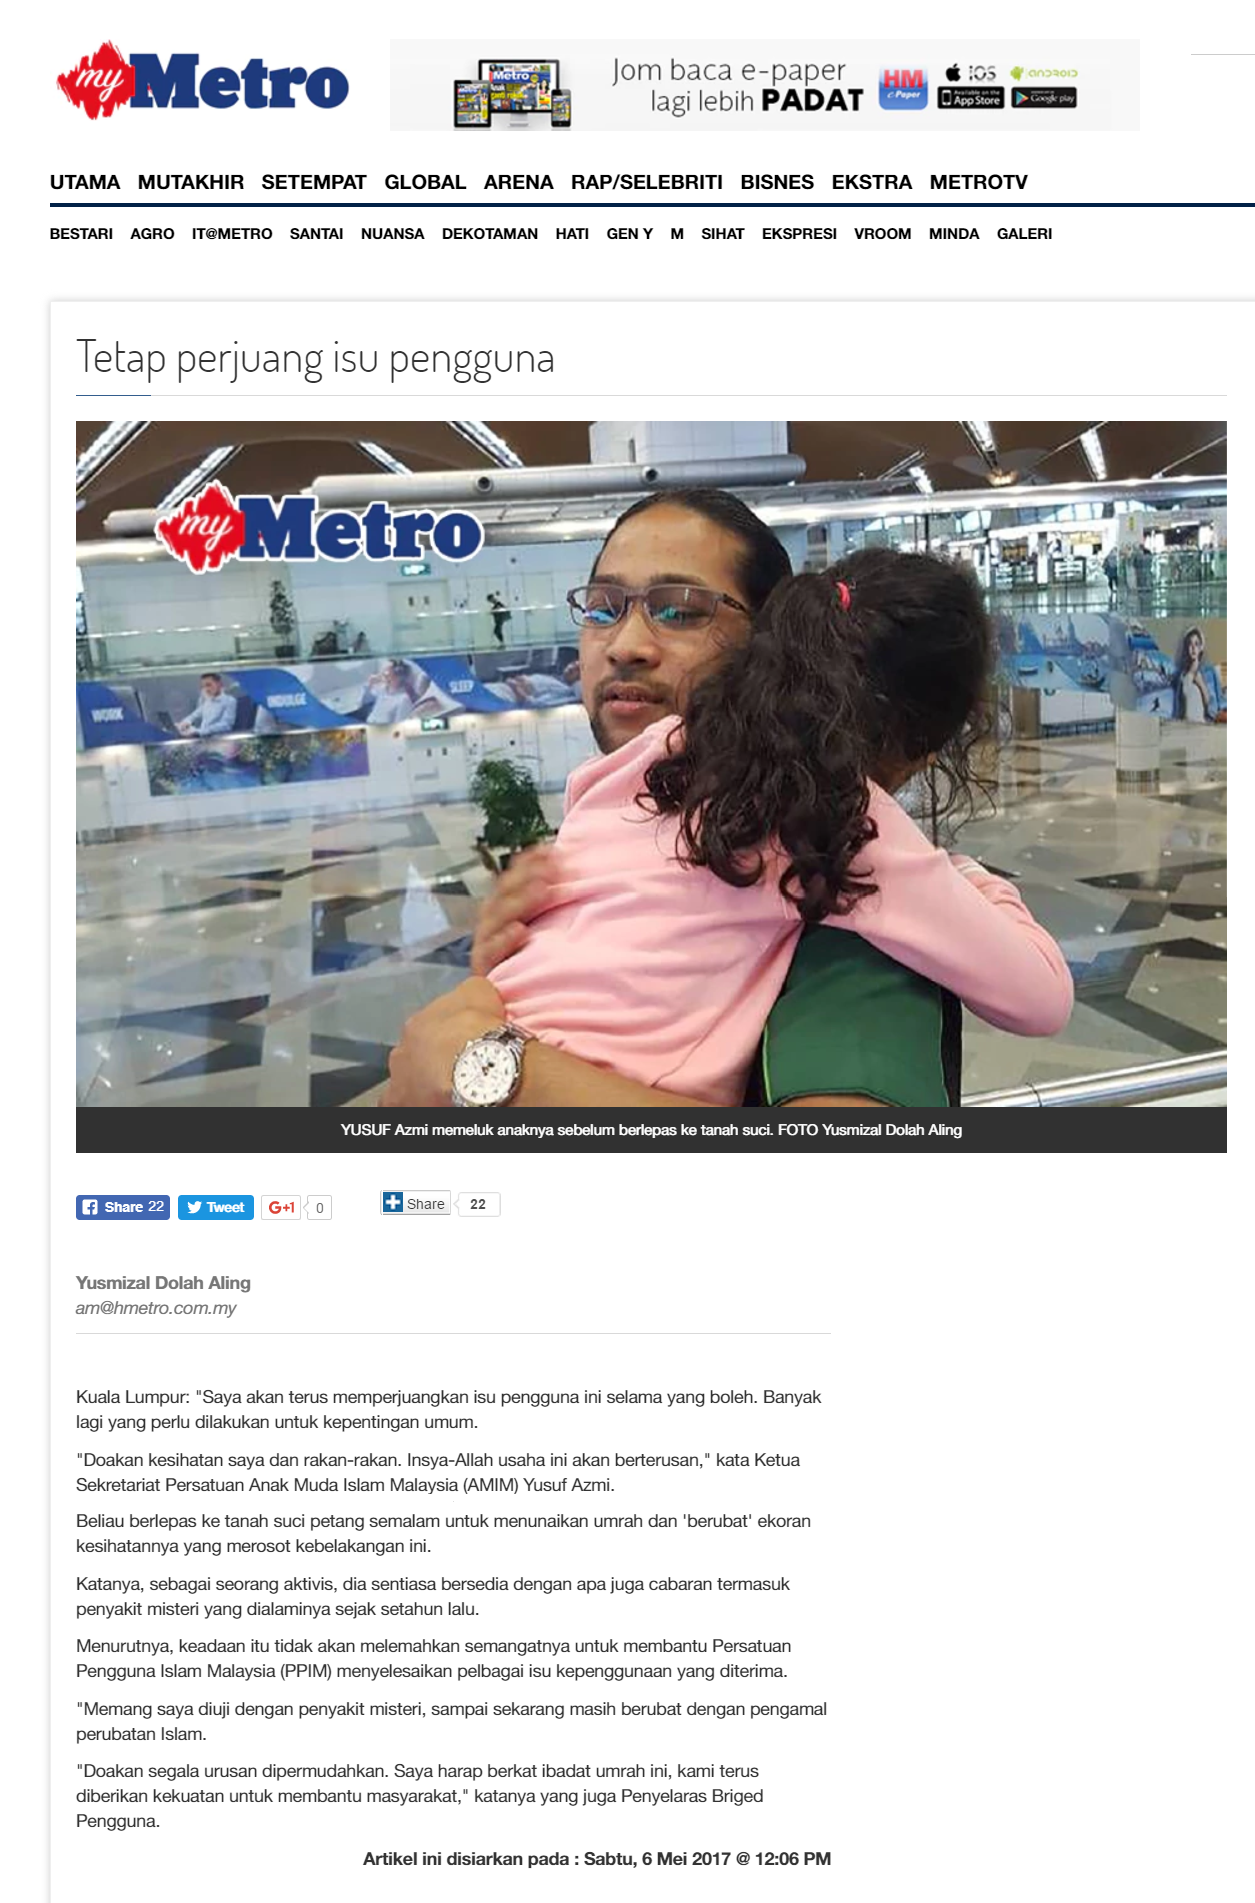 20170506 - Harian Metro Online - Aktiviti - Tetap perjuang isu pengguna